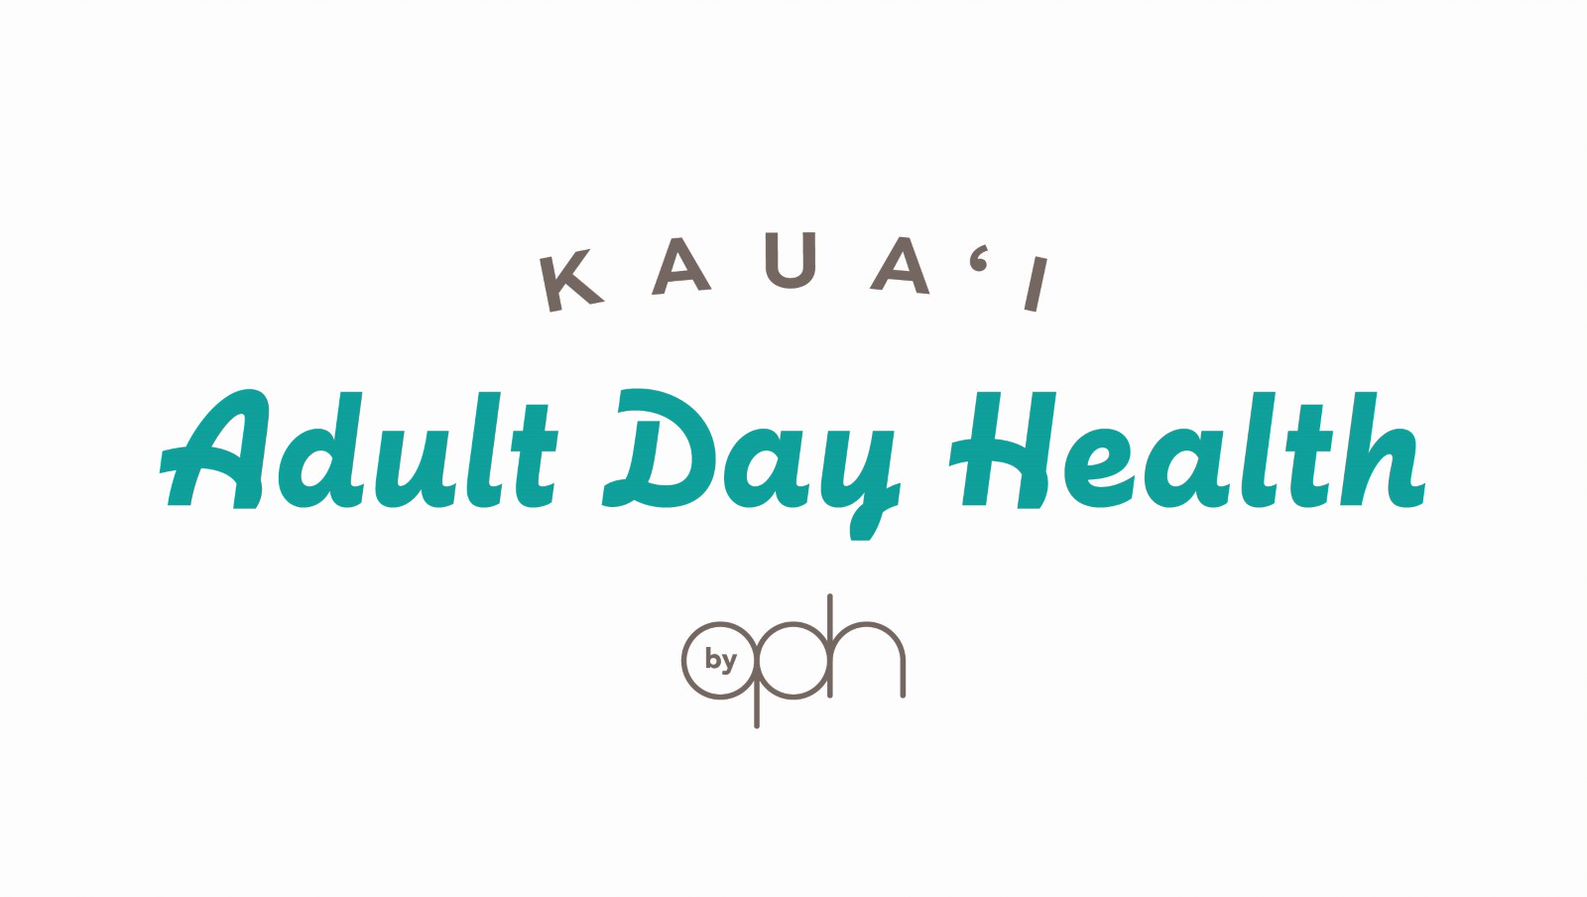 1a. Kauai Adult Day Health Center (Platinum)